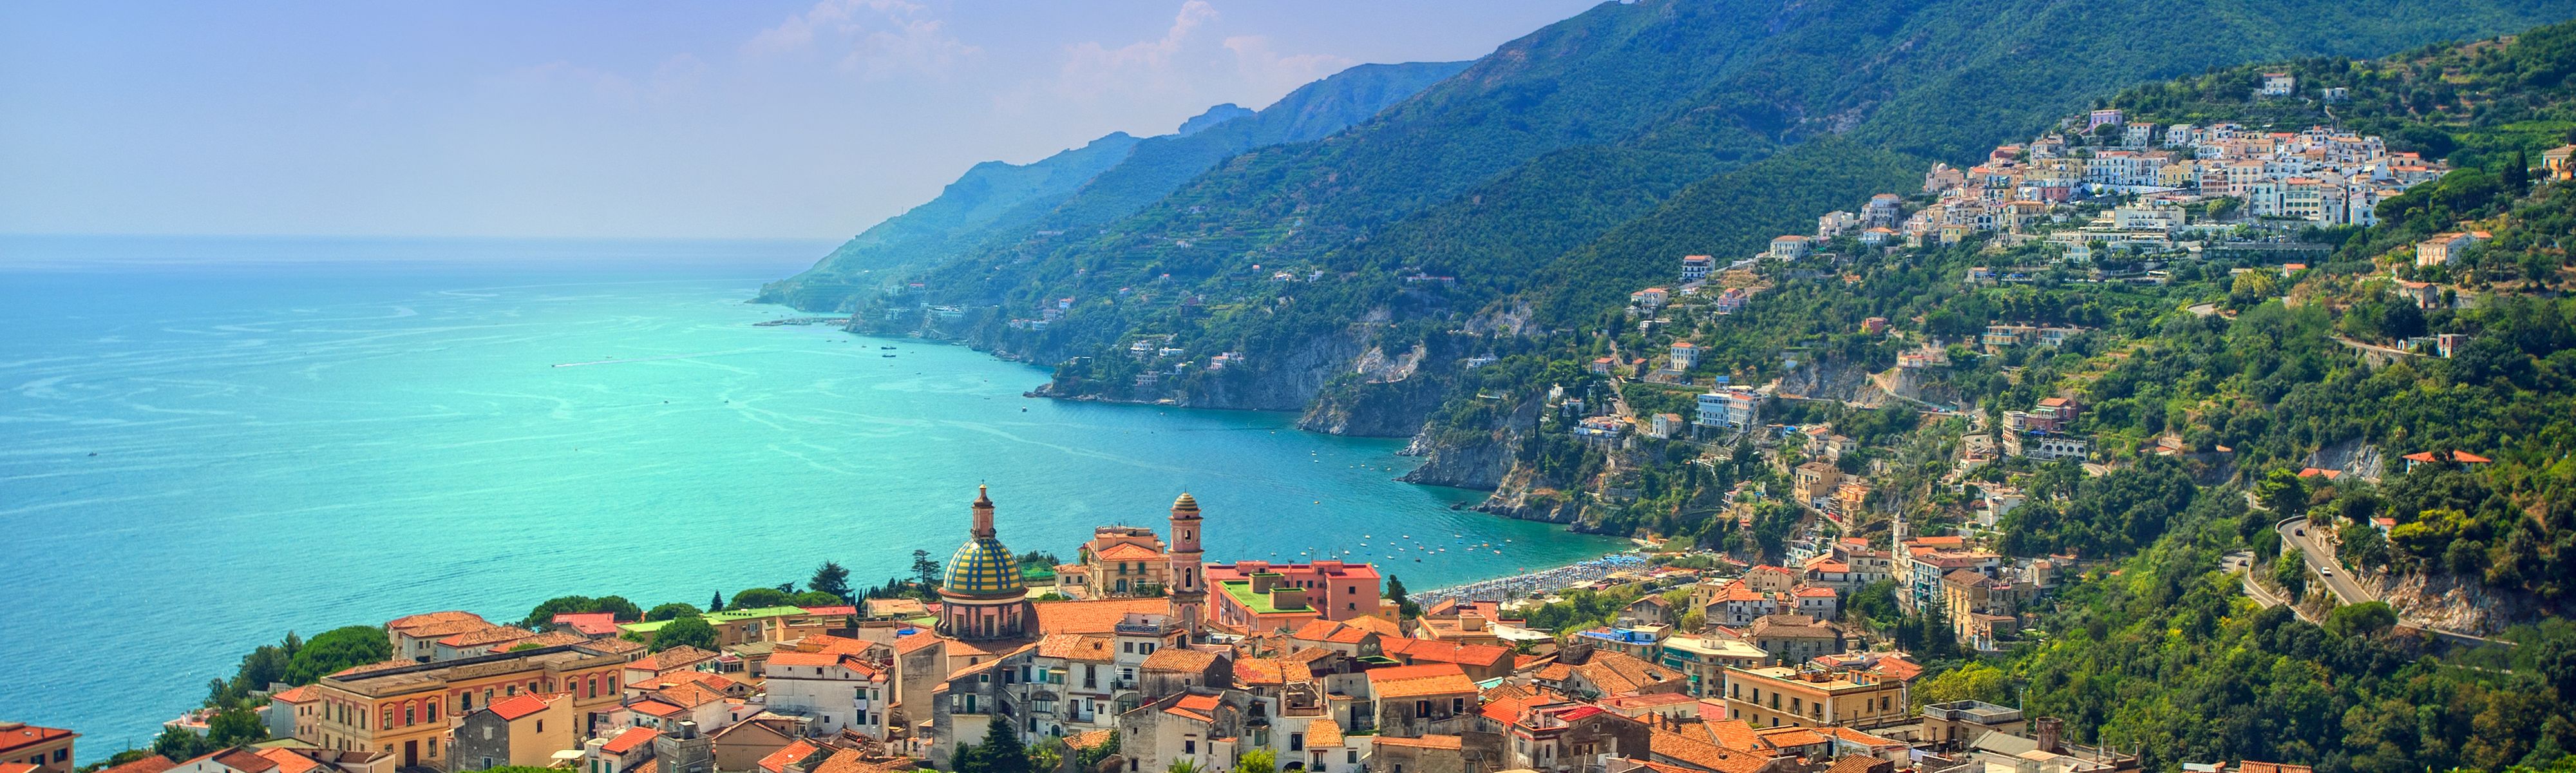 coastline in Italy